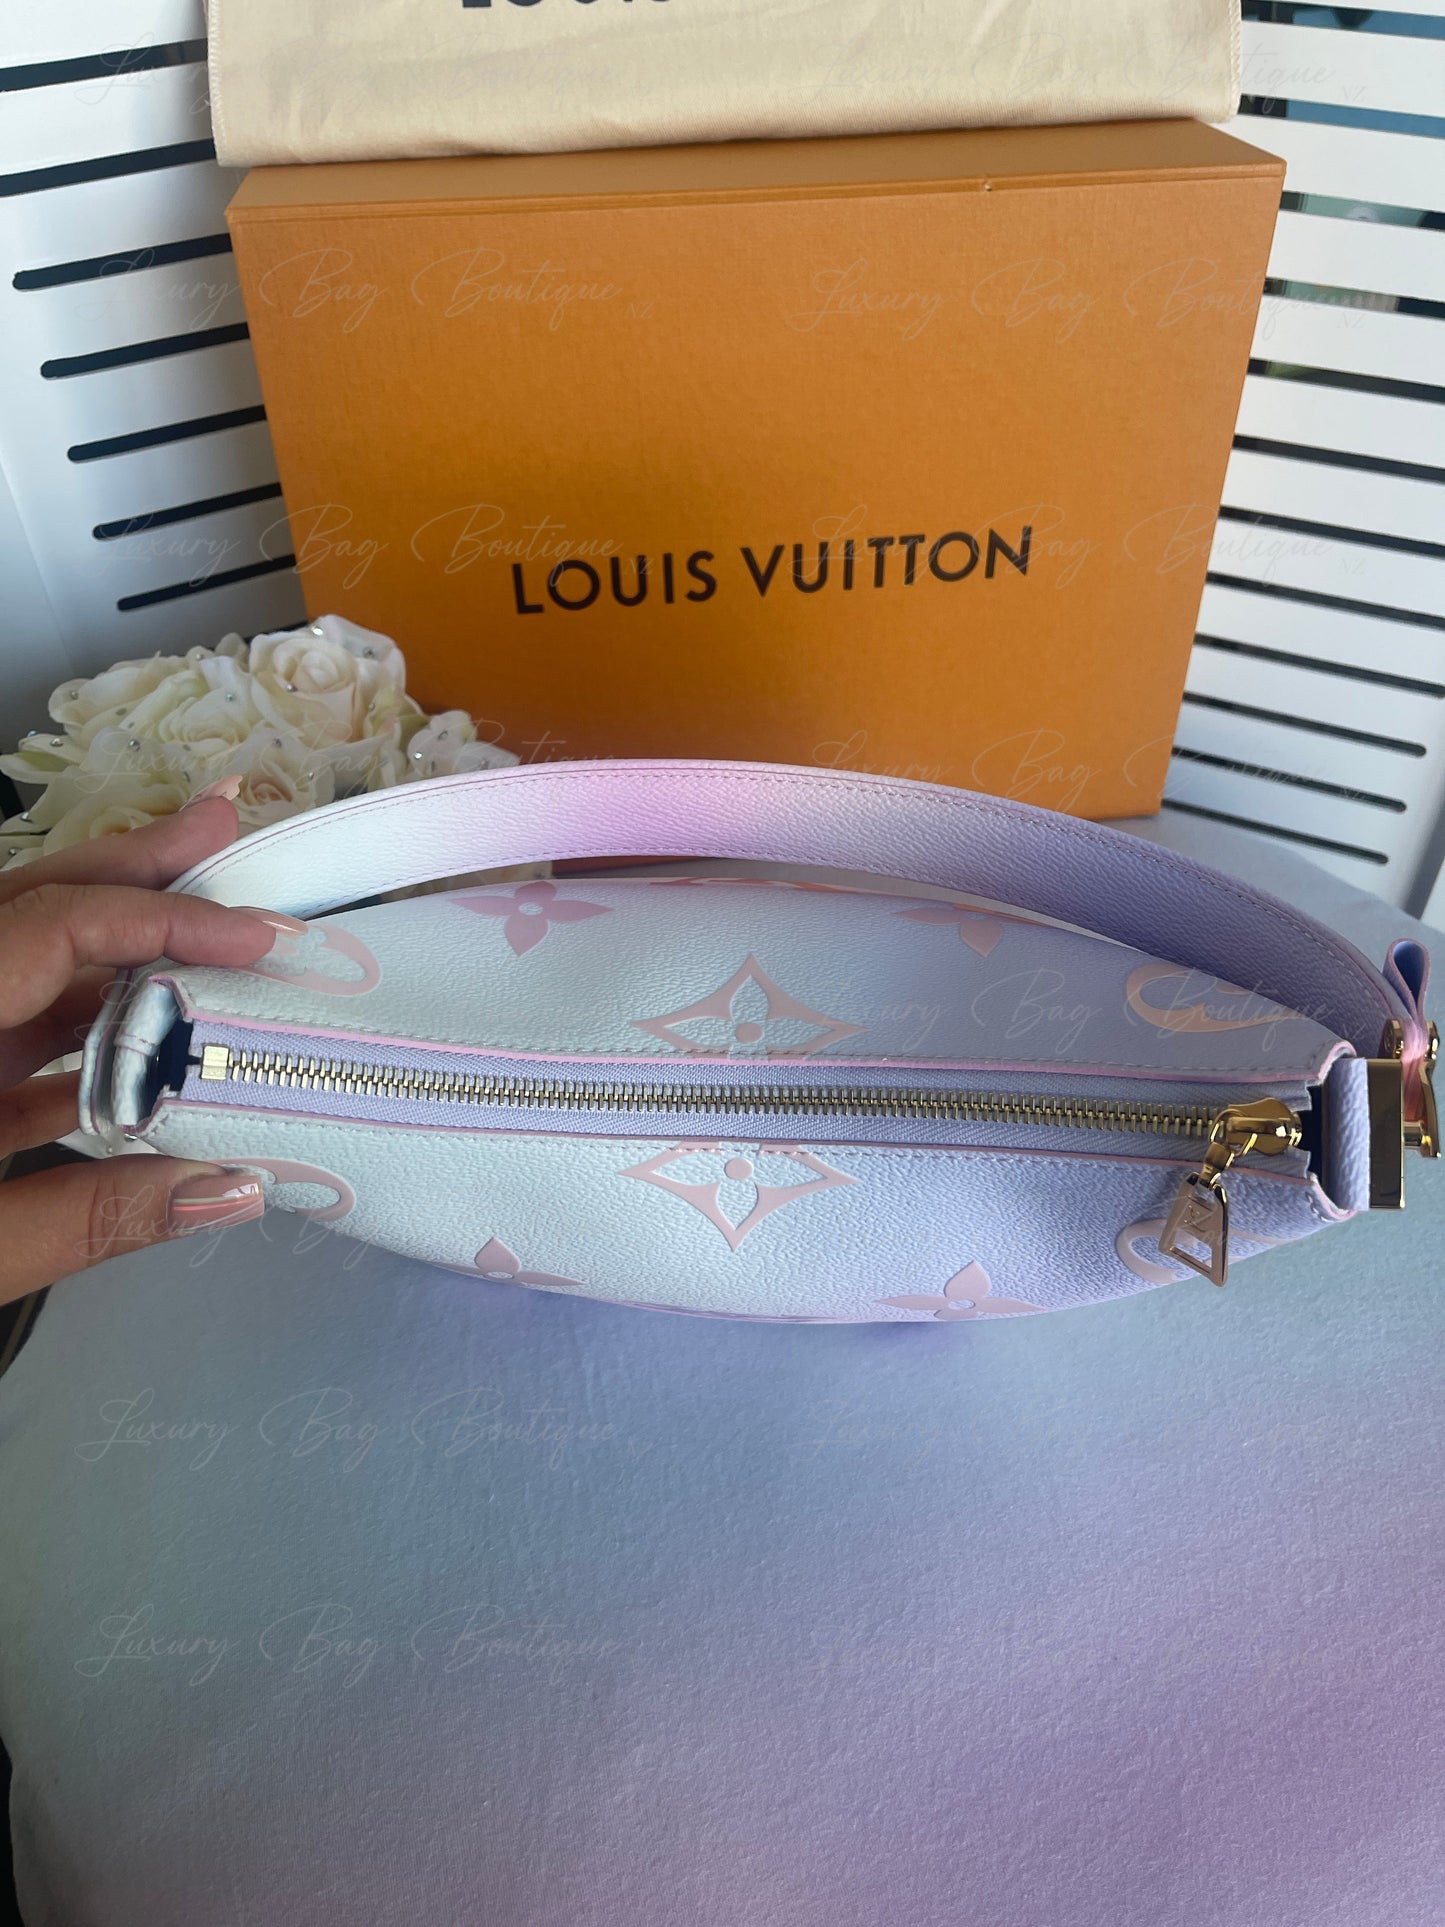 Louis Vuitton Marshmallow Bag in Sunrise Pastel 😍🌅 #lv_world